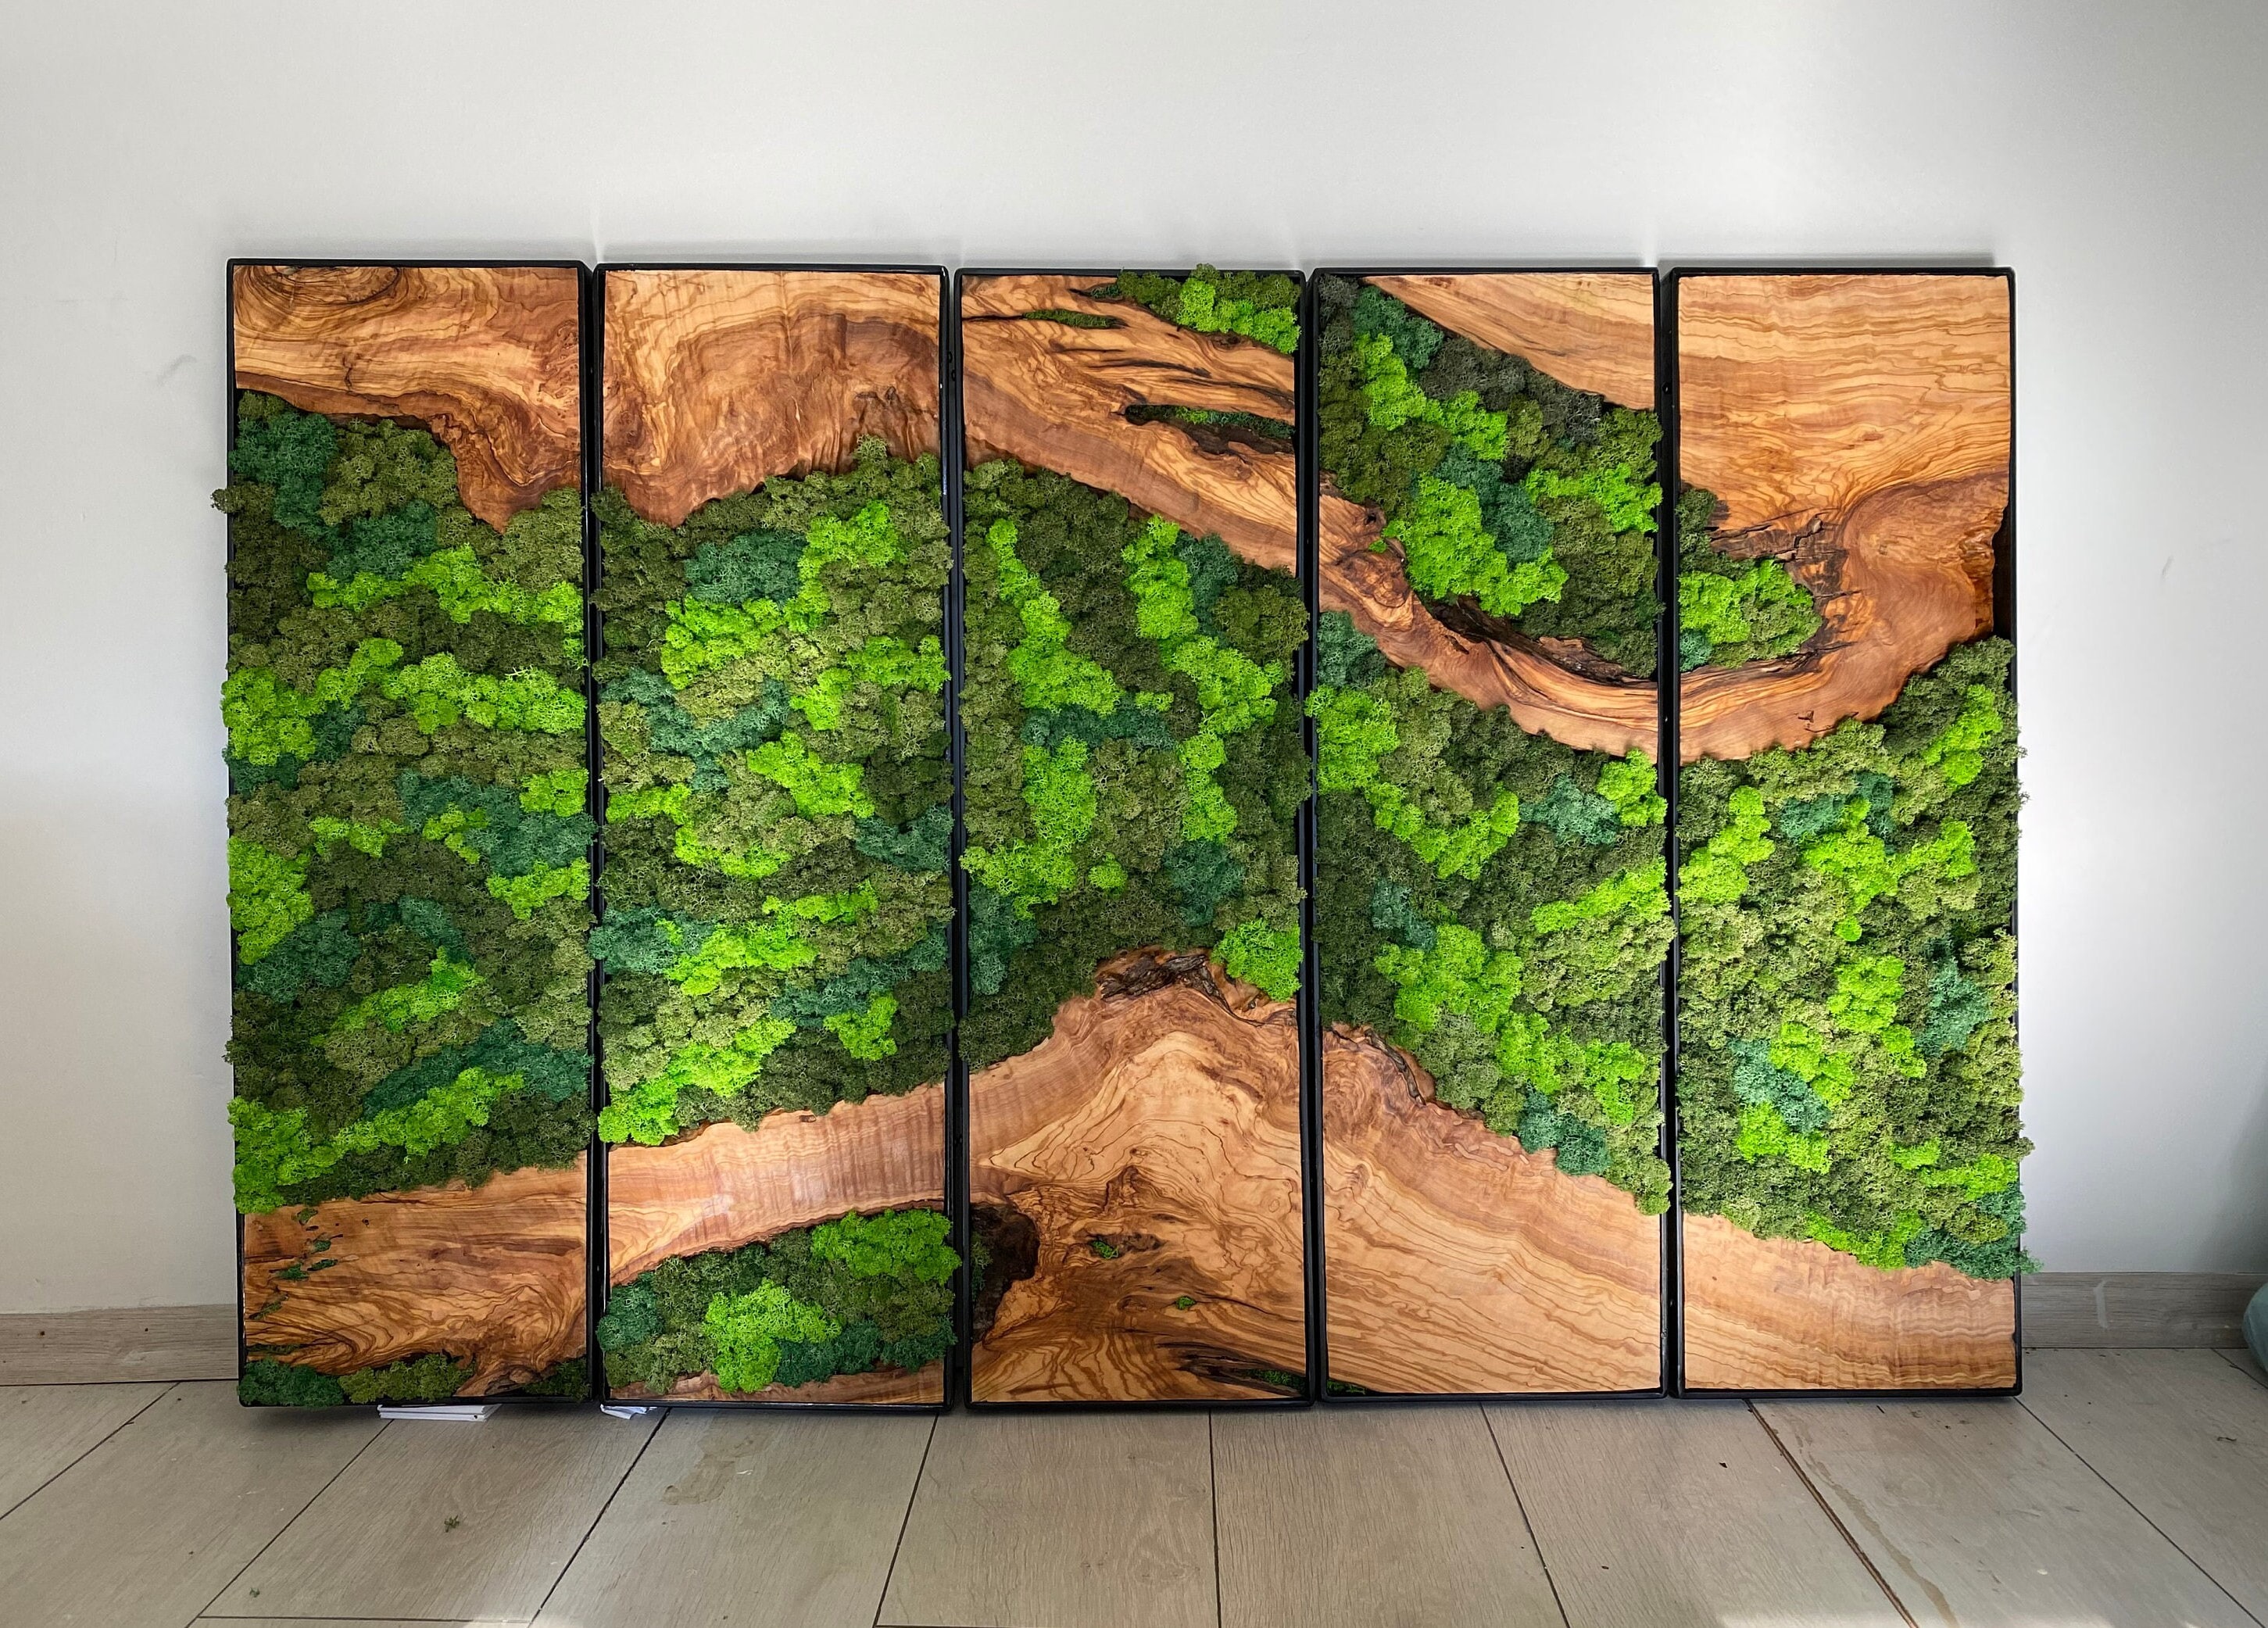 Moss Wall Art 36x18 with Manzanita Branches